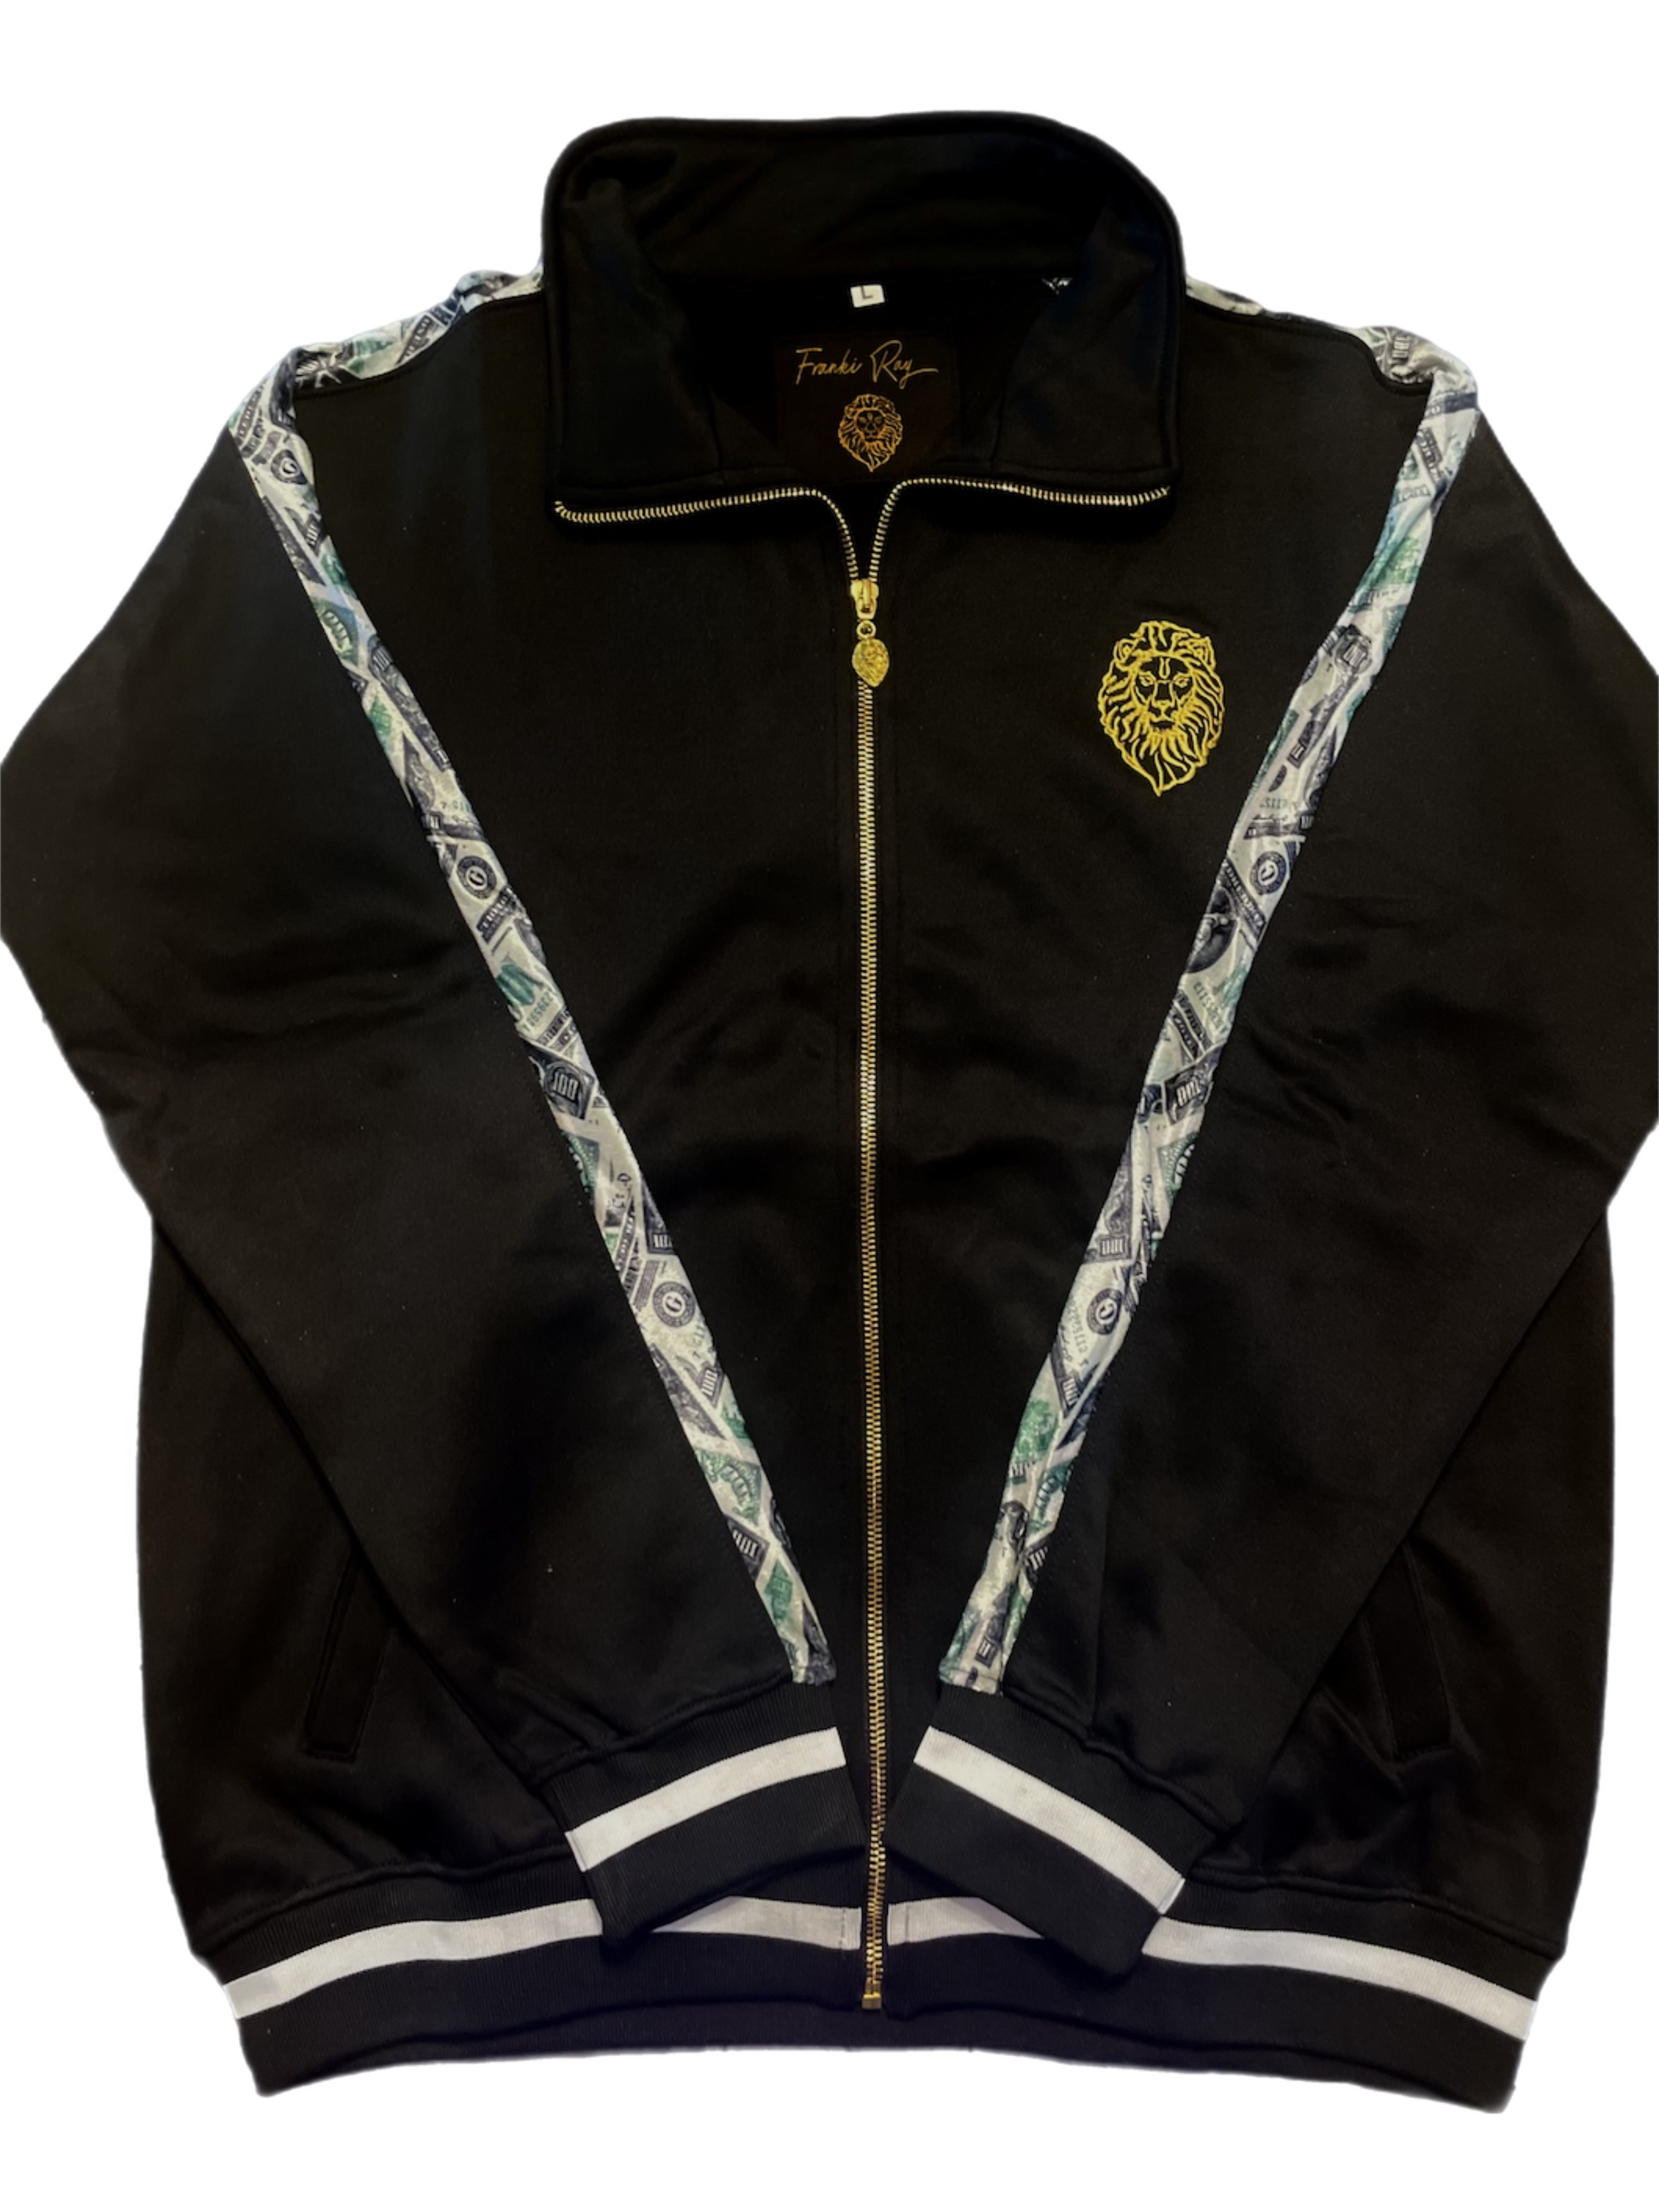 Men's Black Zip Up Jacket & Jogger (each piece sold separately)